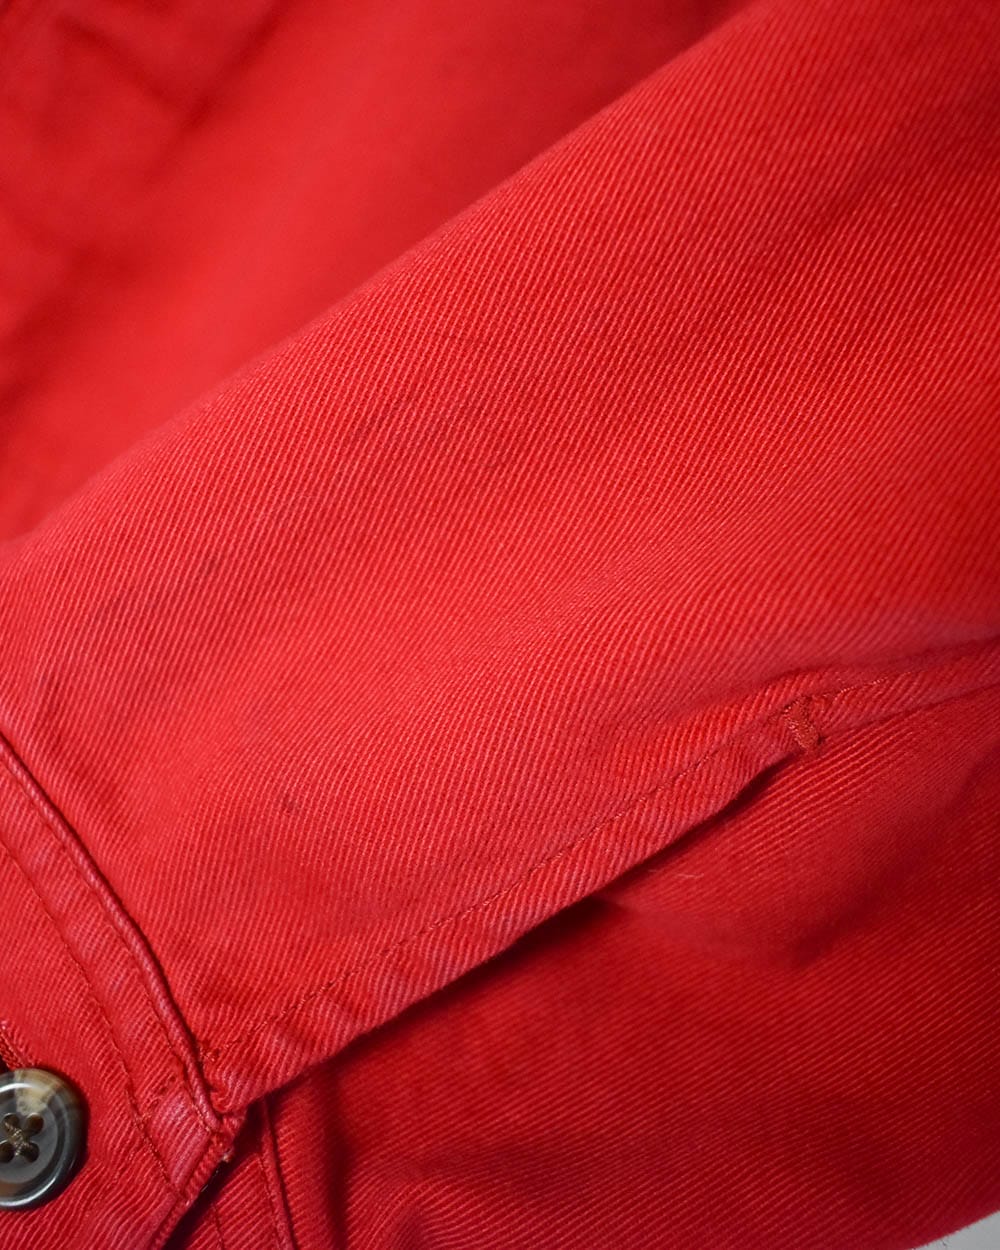 Red Polo Ralph Lauren Harrington Jacket - Medium Women's